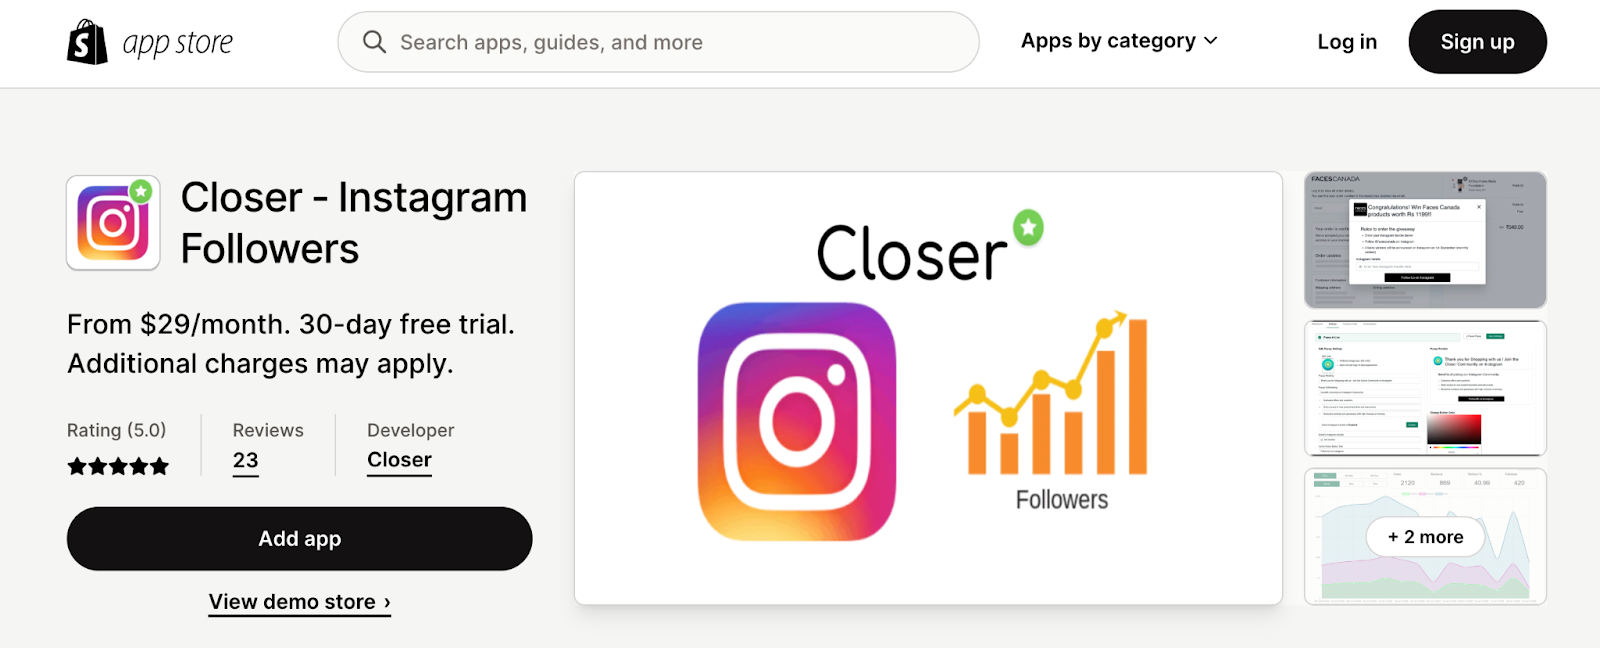 best shopify apps for instagram - Closer - Instagram Followers